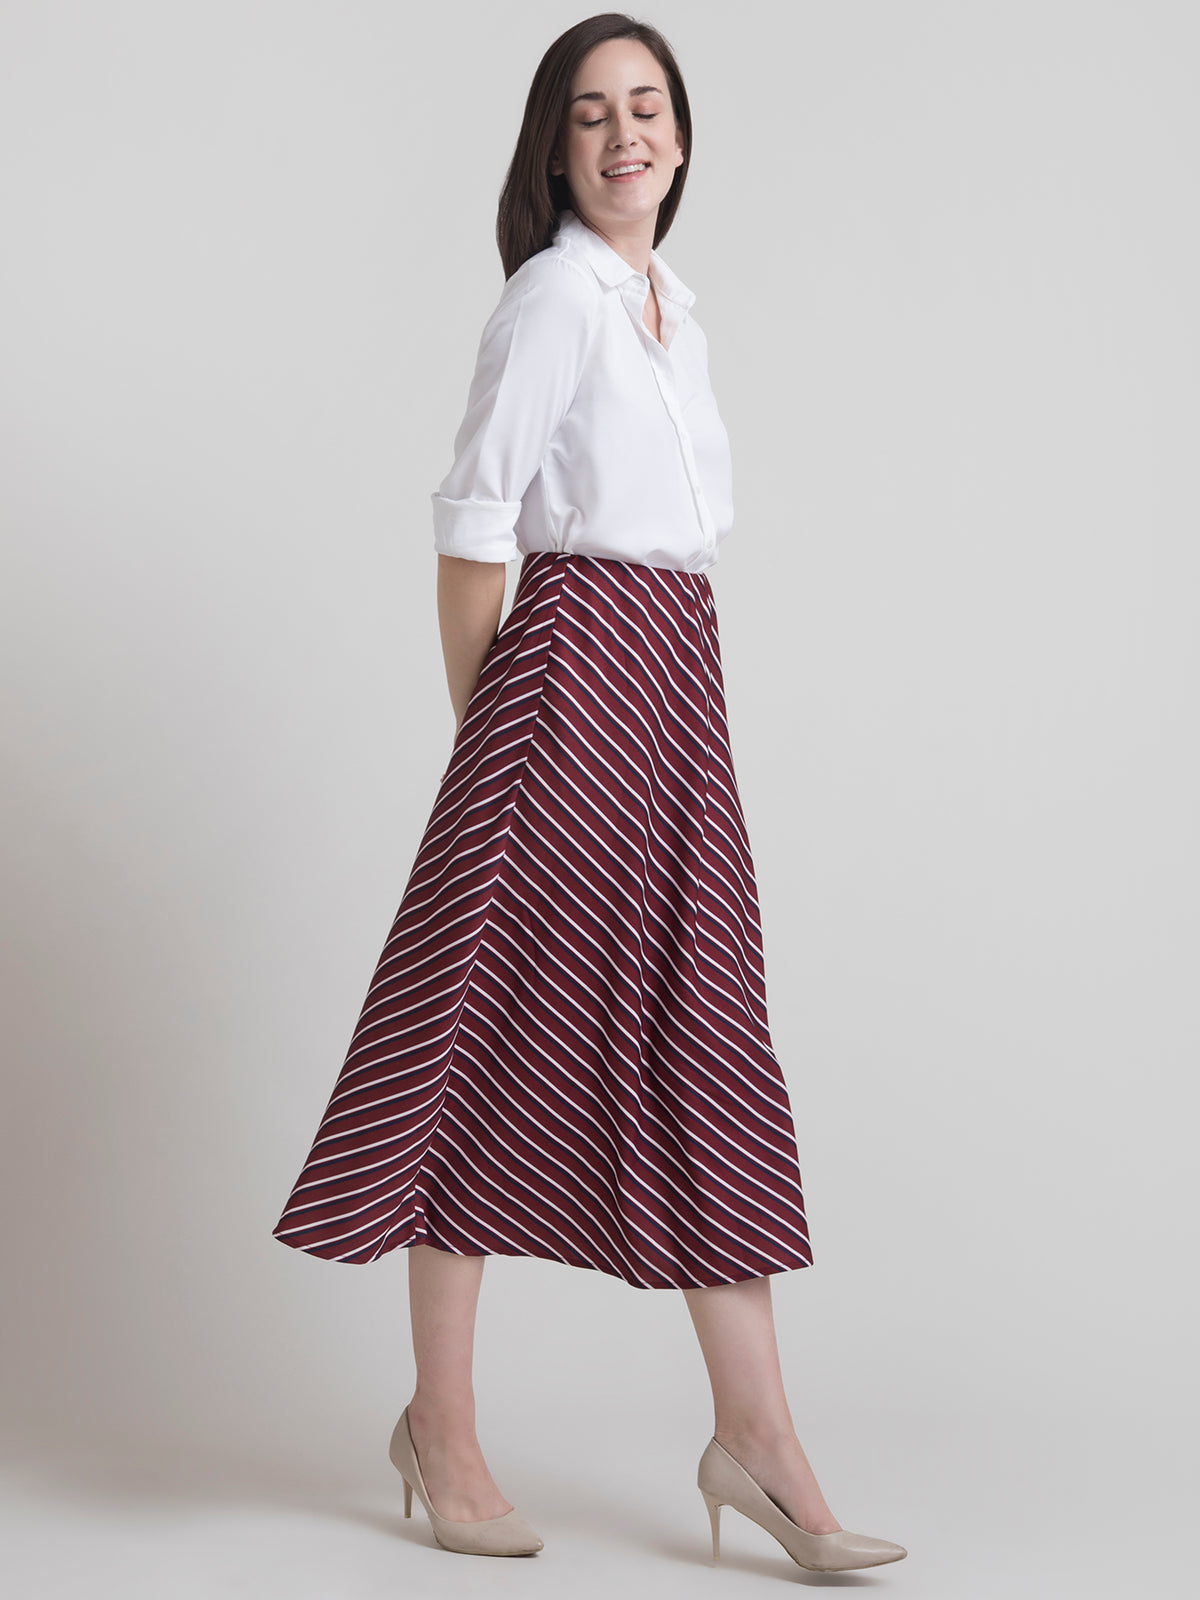 Striped Bias A Line Skirt - Maroon| Formal Skirts